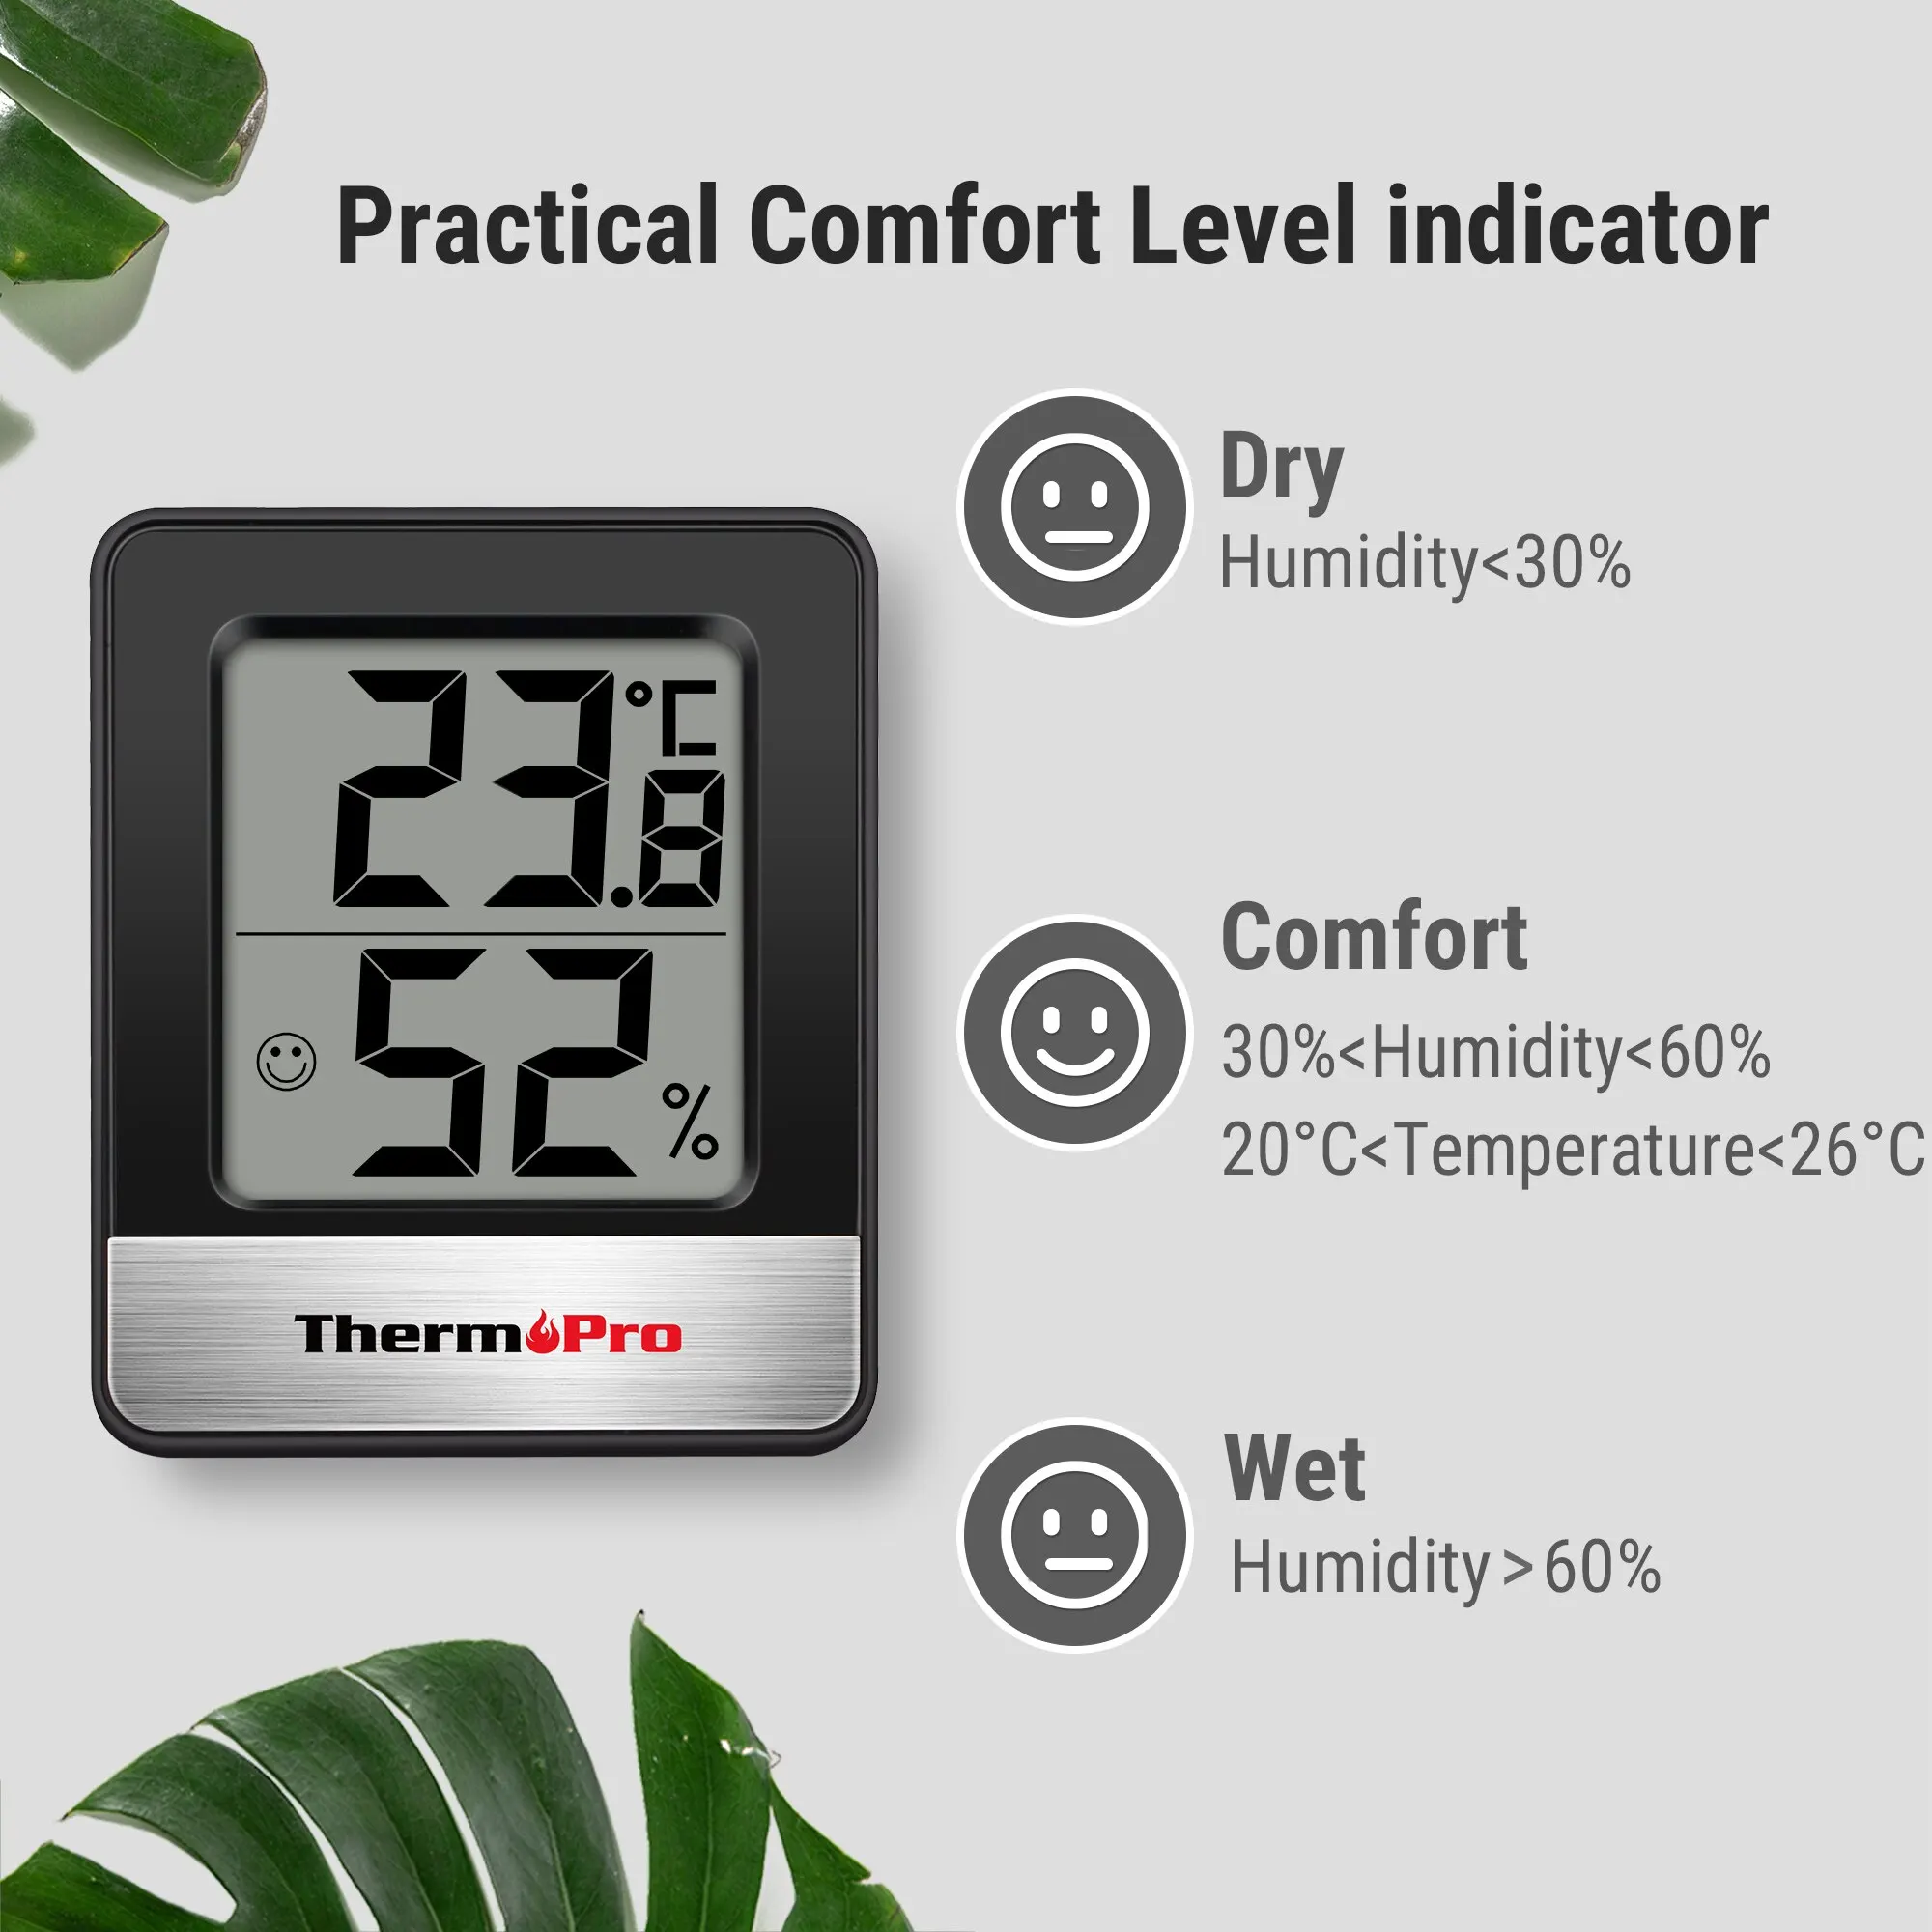 ThermoPro TP49 το Μικρό Μέγεθος Ψηφιακό Εσωτερικό Θερμόμετρο Υγρόμετρο Για Οικιακή Χρήση Με Δύο Χρώμα Μαύρο Και Λευκό